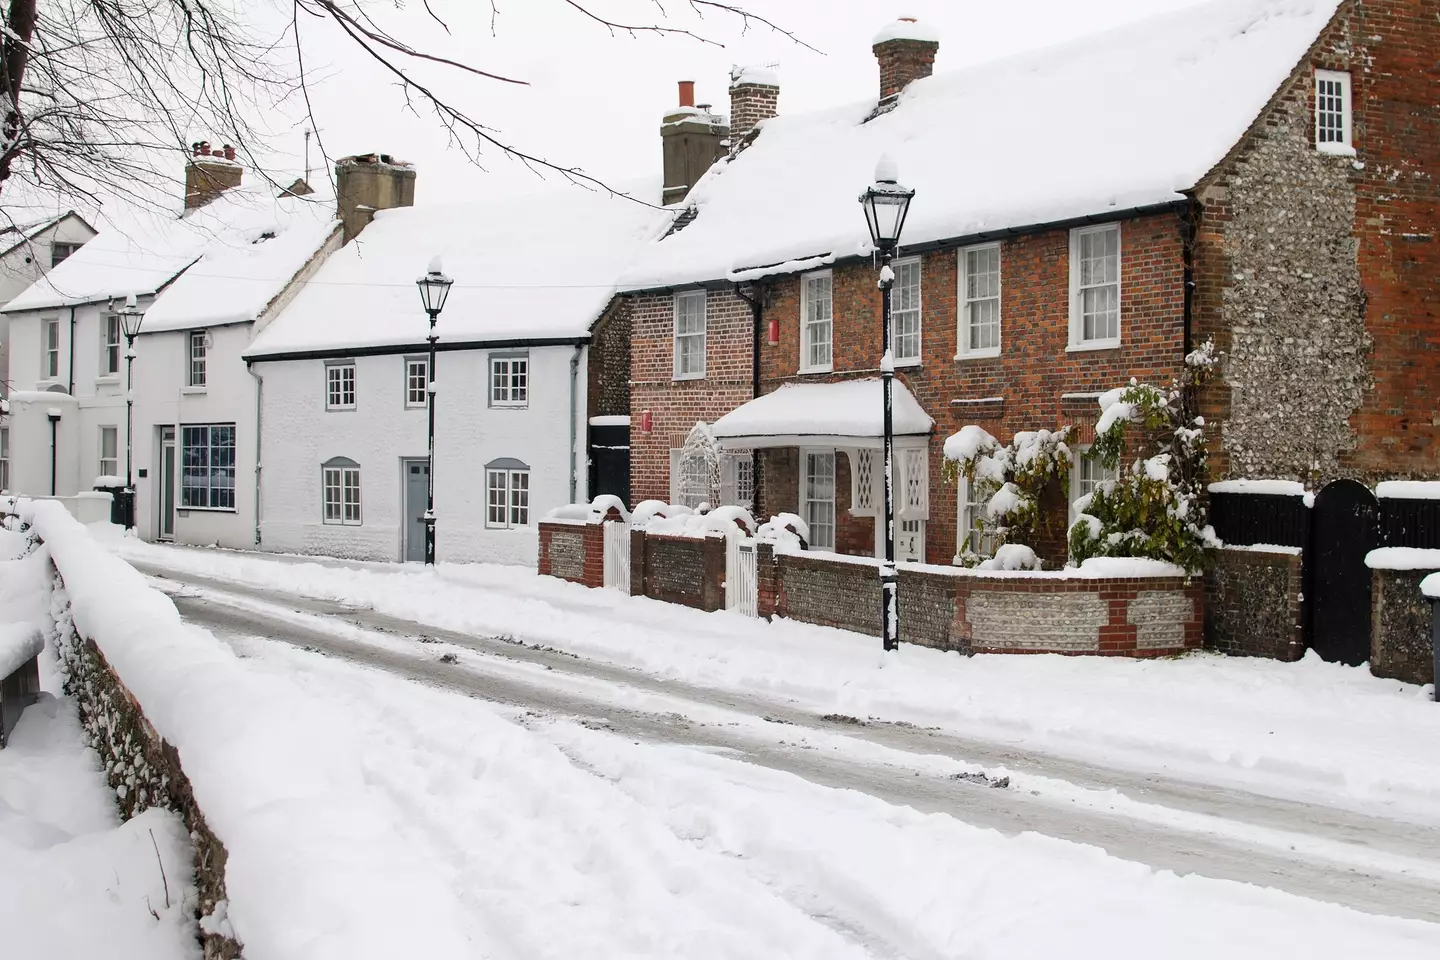 Heavy snowfall has hit certain areas of the UK.